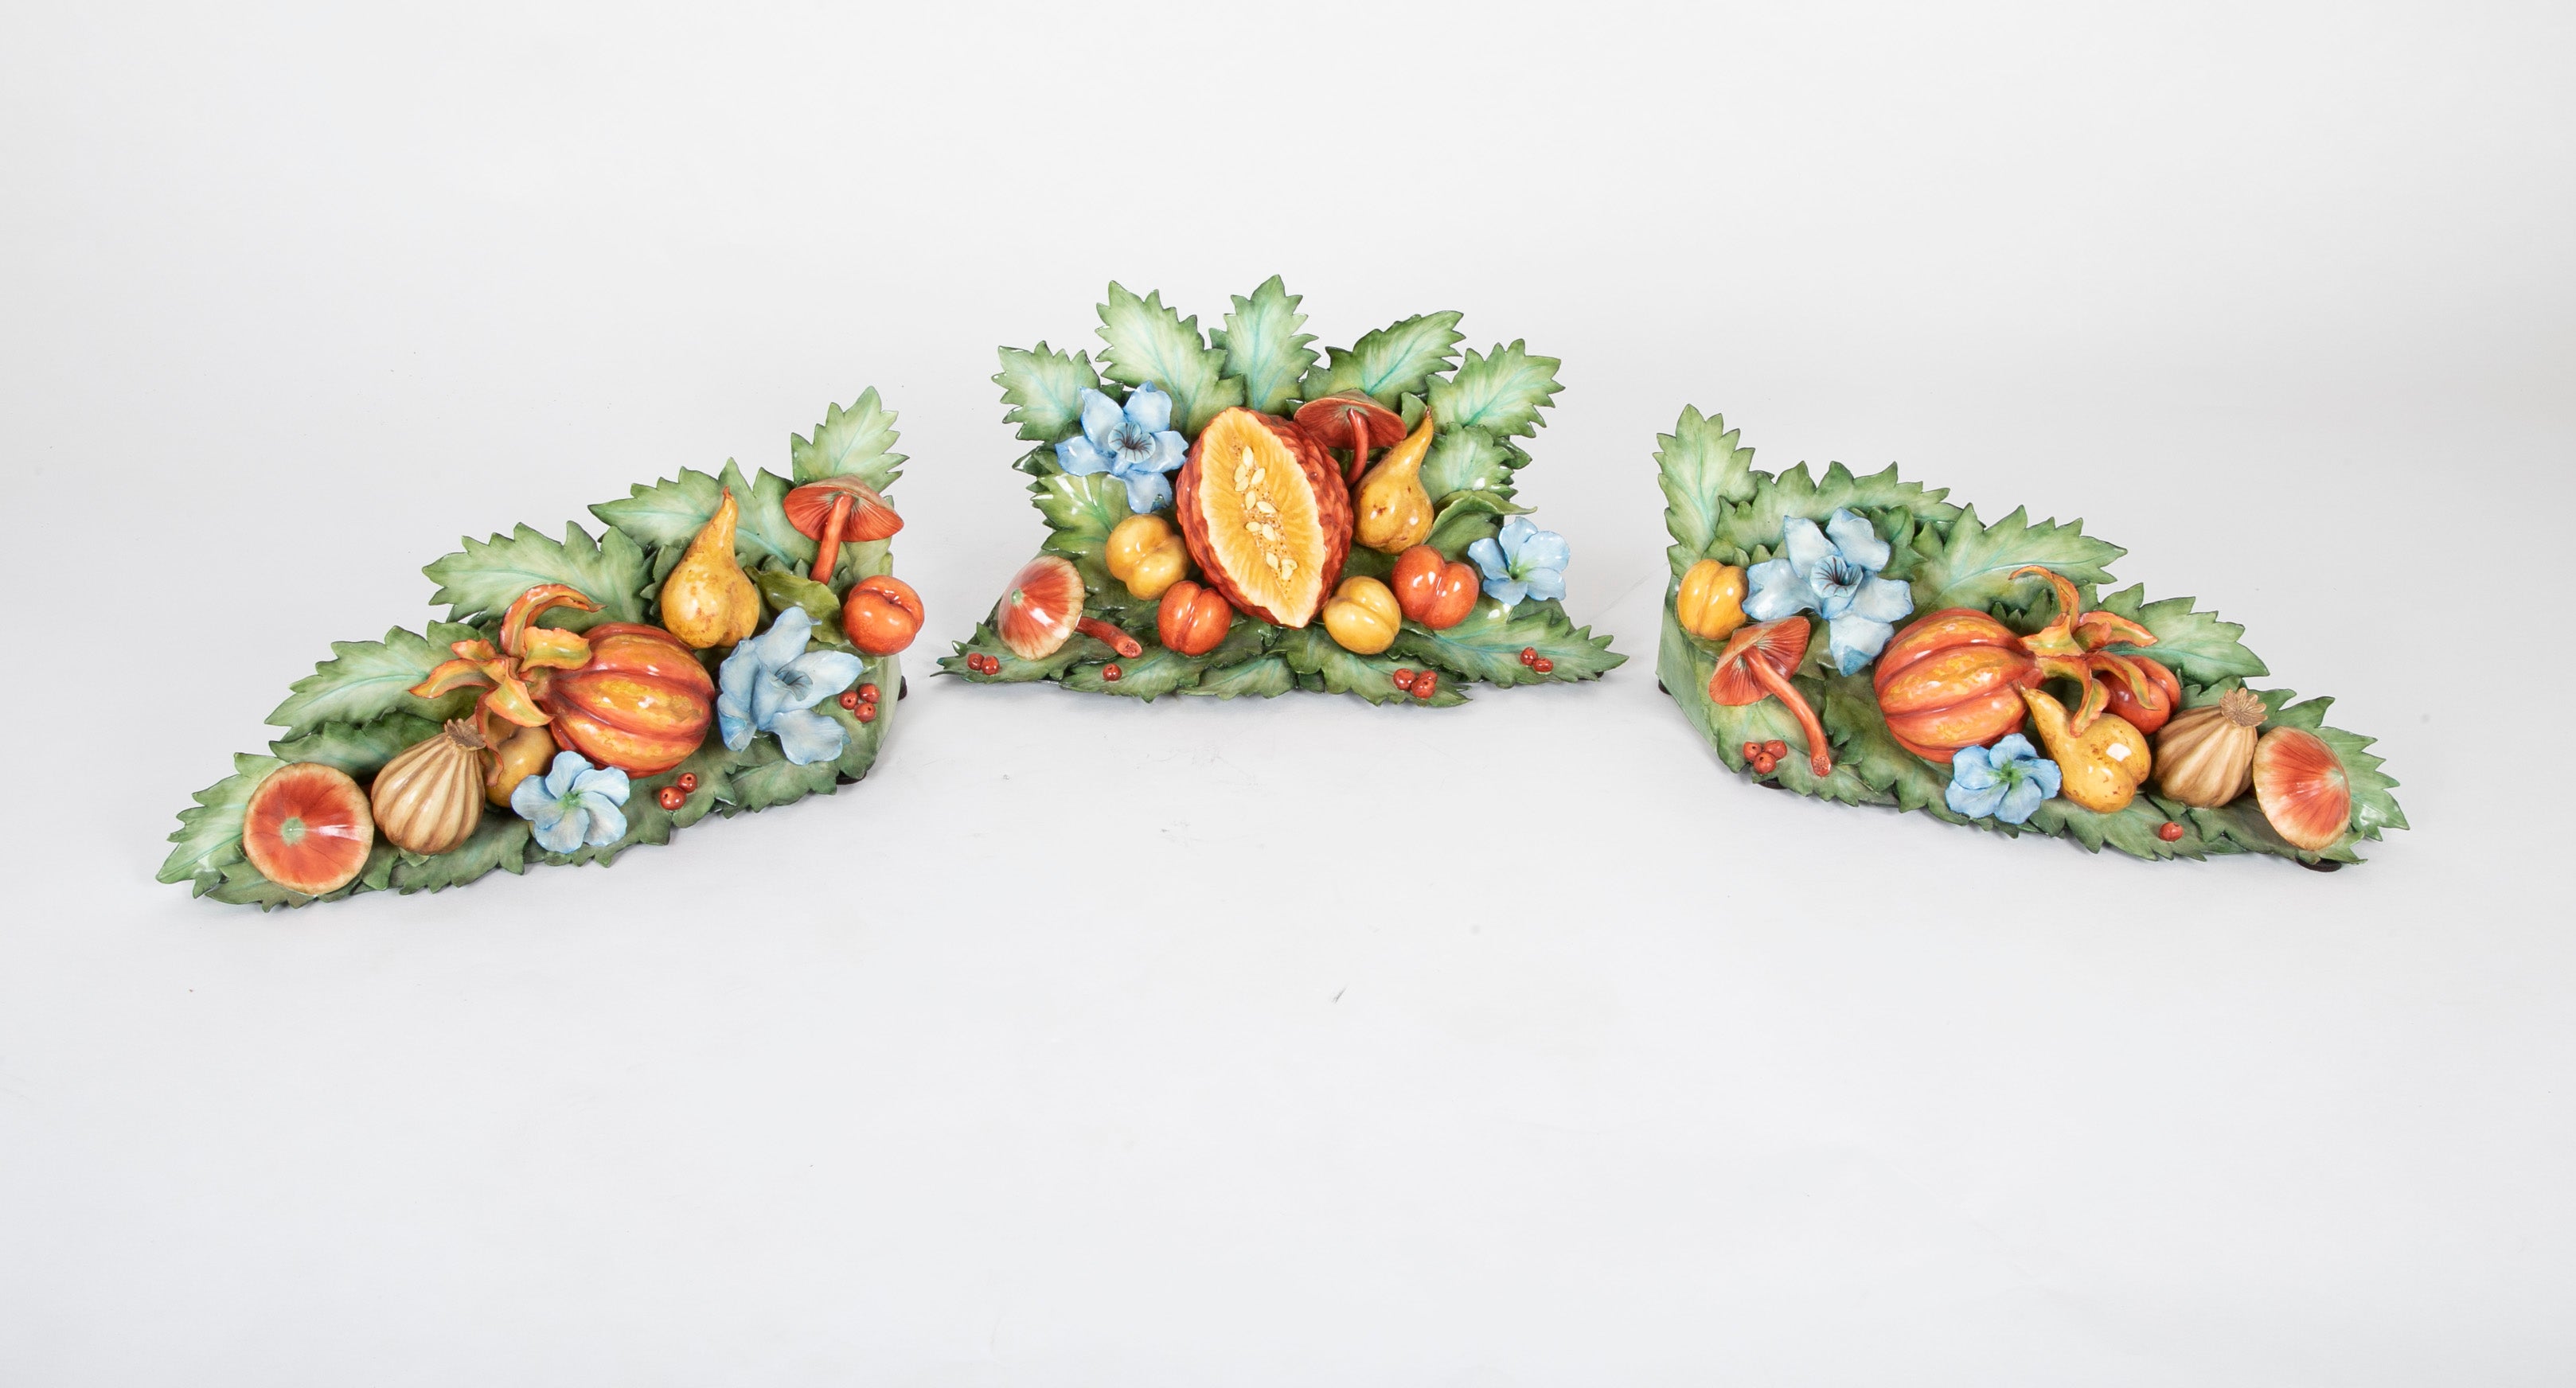 Large 3 Part Porcelain Garniture Set with Fruit, Flowers & Vegetables by Katherine Houston